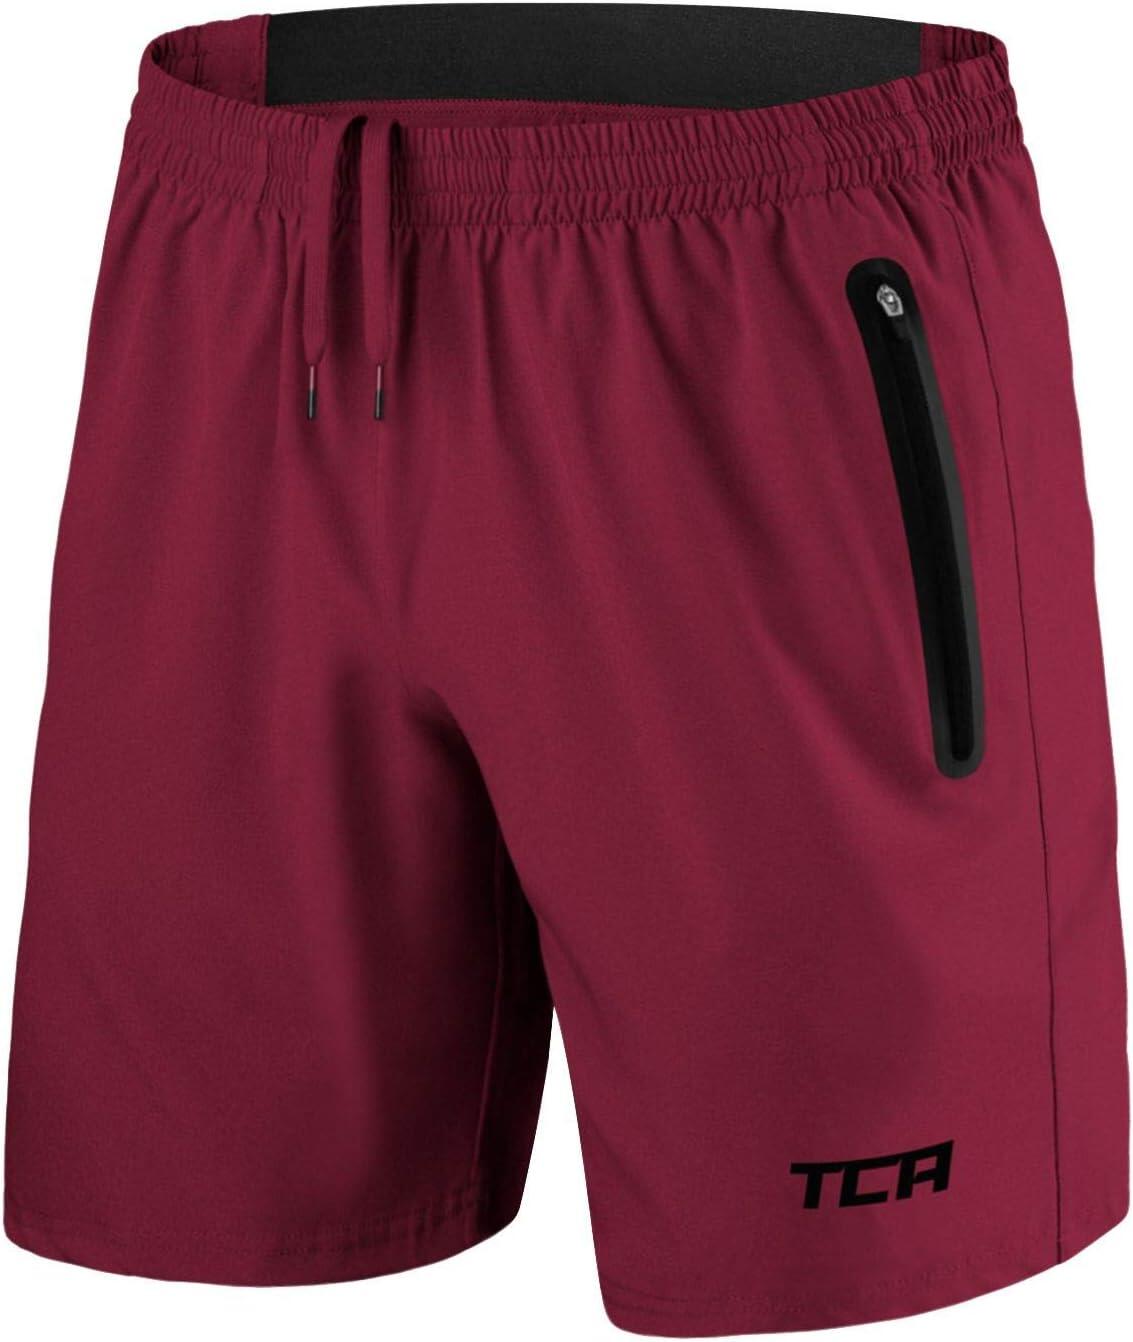 Men's Elite Tech Lightweight Running Shorts with Zip Pockets - Carmine Red 1/6